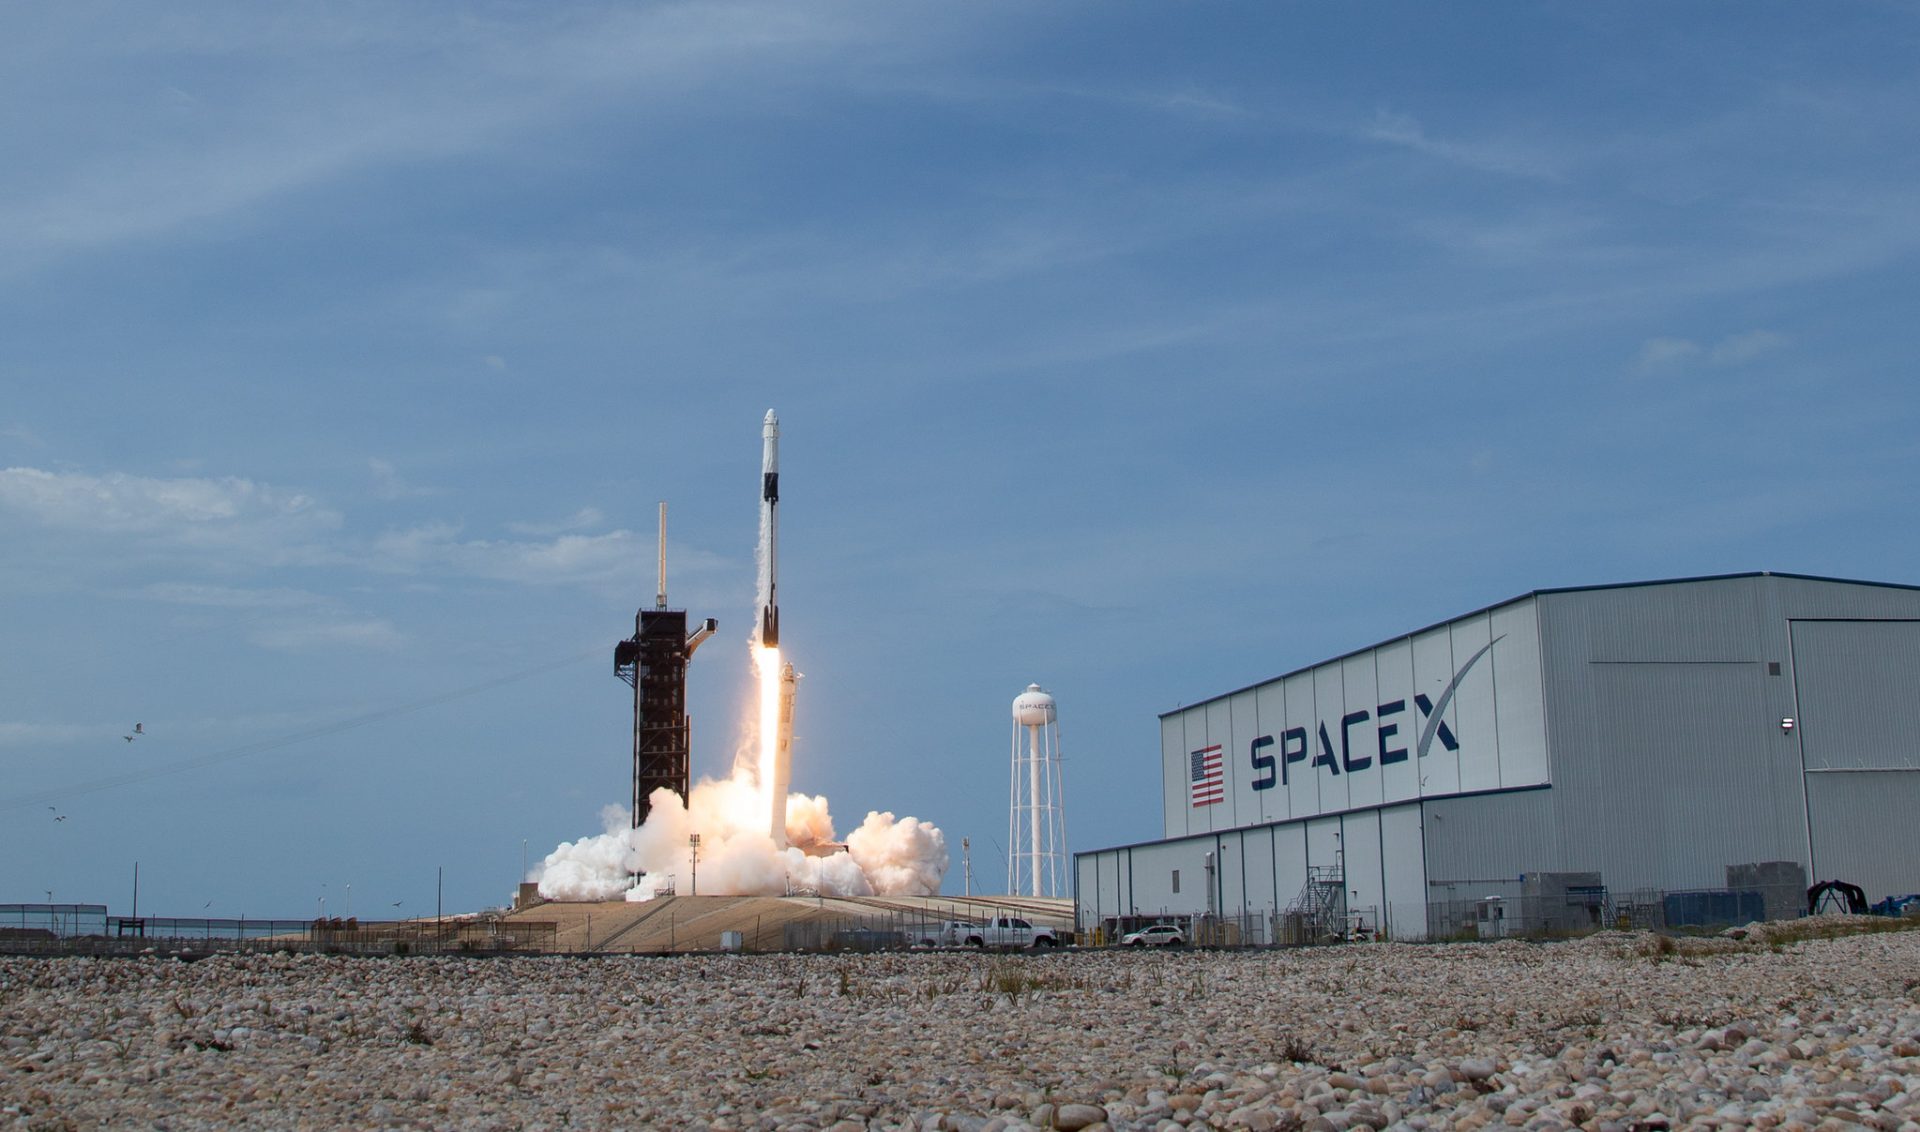 SpaceX raises $1.9 billion in latest funding round: document